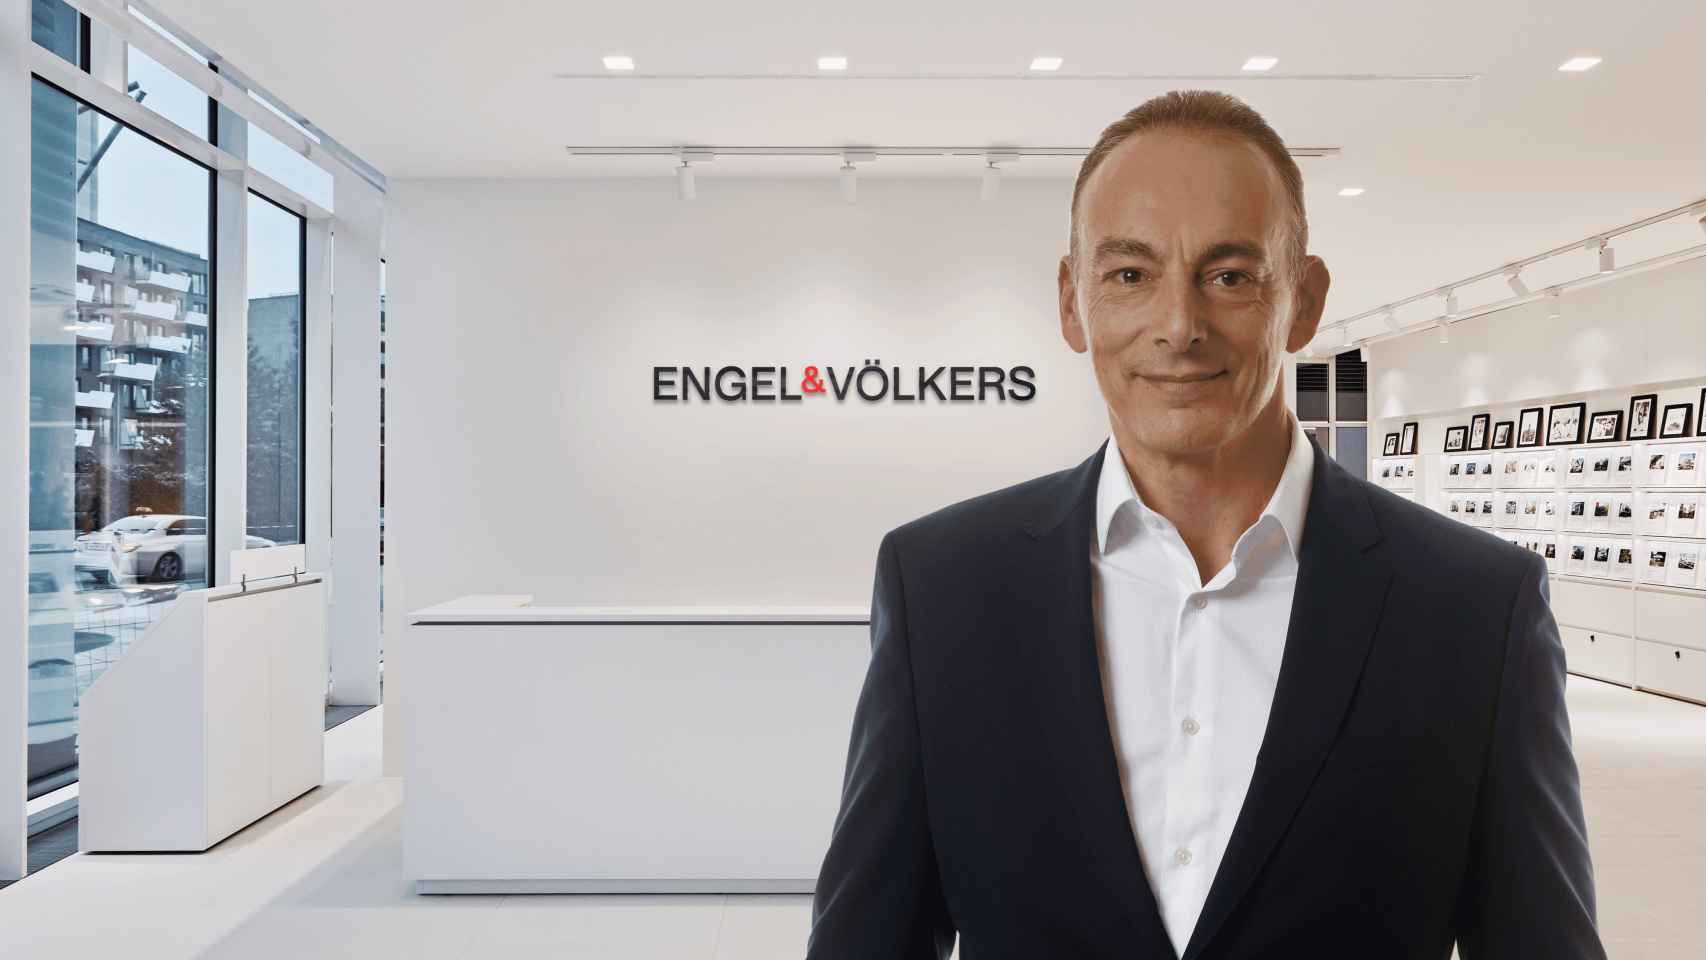 Luis Nicolás Fernández, CEO Engel & Völkers Finance España